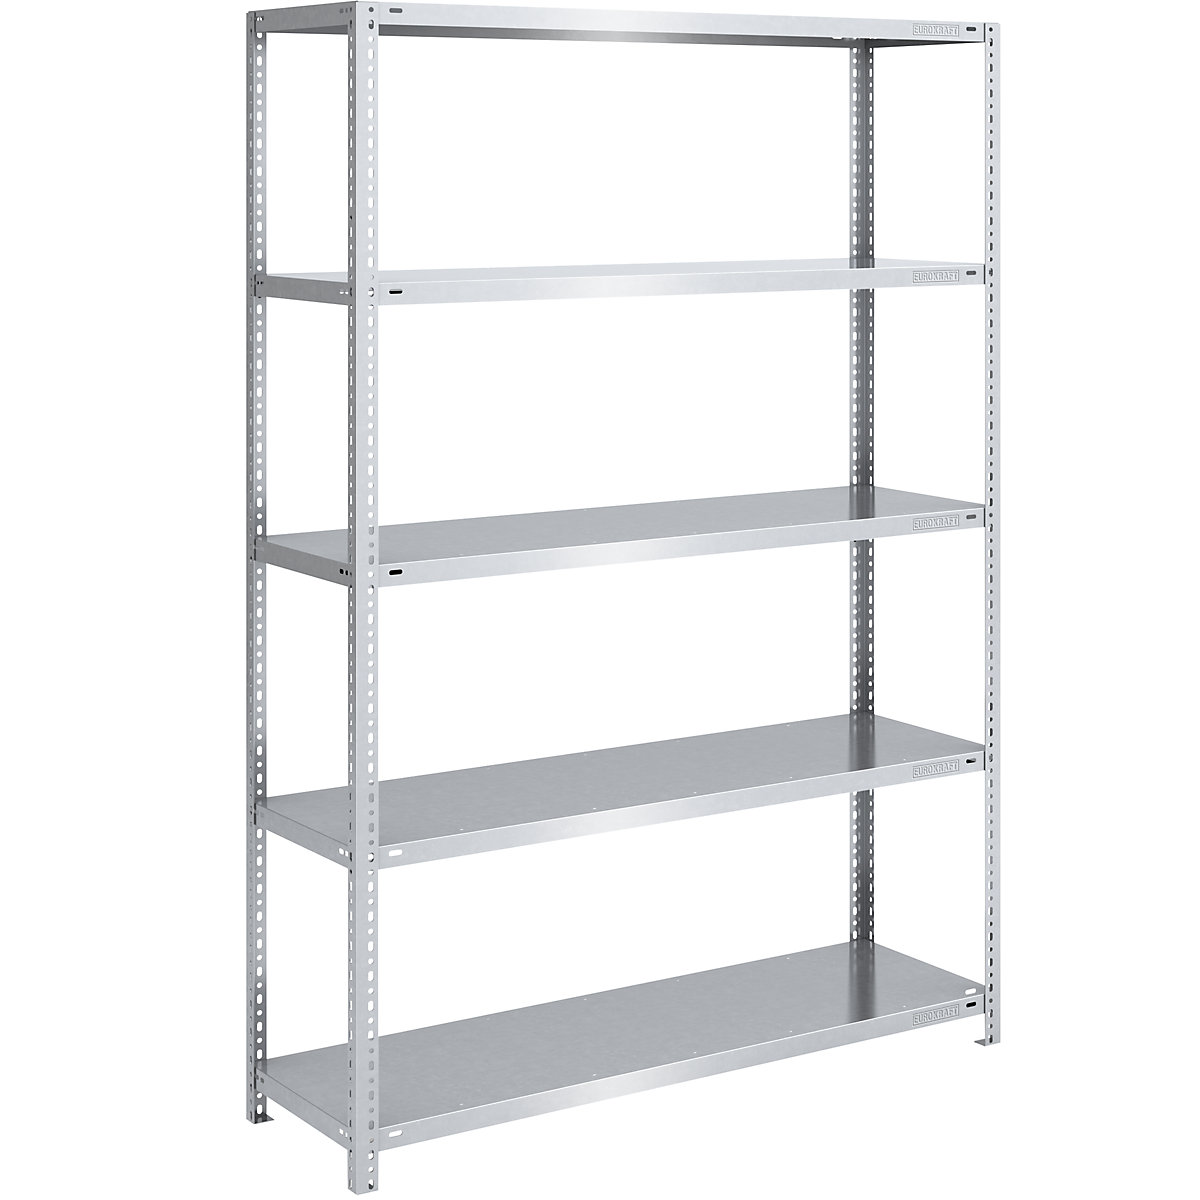 Bolt-together shelf unit, light duty, zinc plated – eurokraft pro, shelf unit height 2000 mm, shelf width 1300 mm, depth 500 mm, standard shelf unit-10